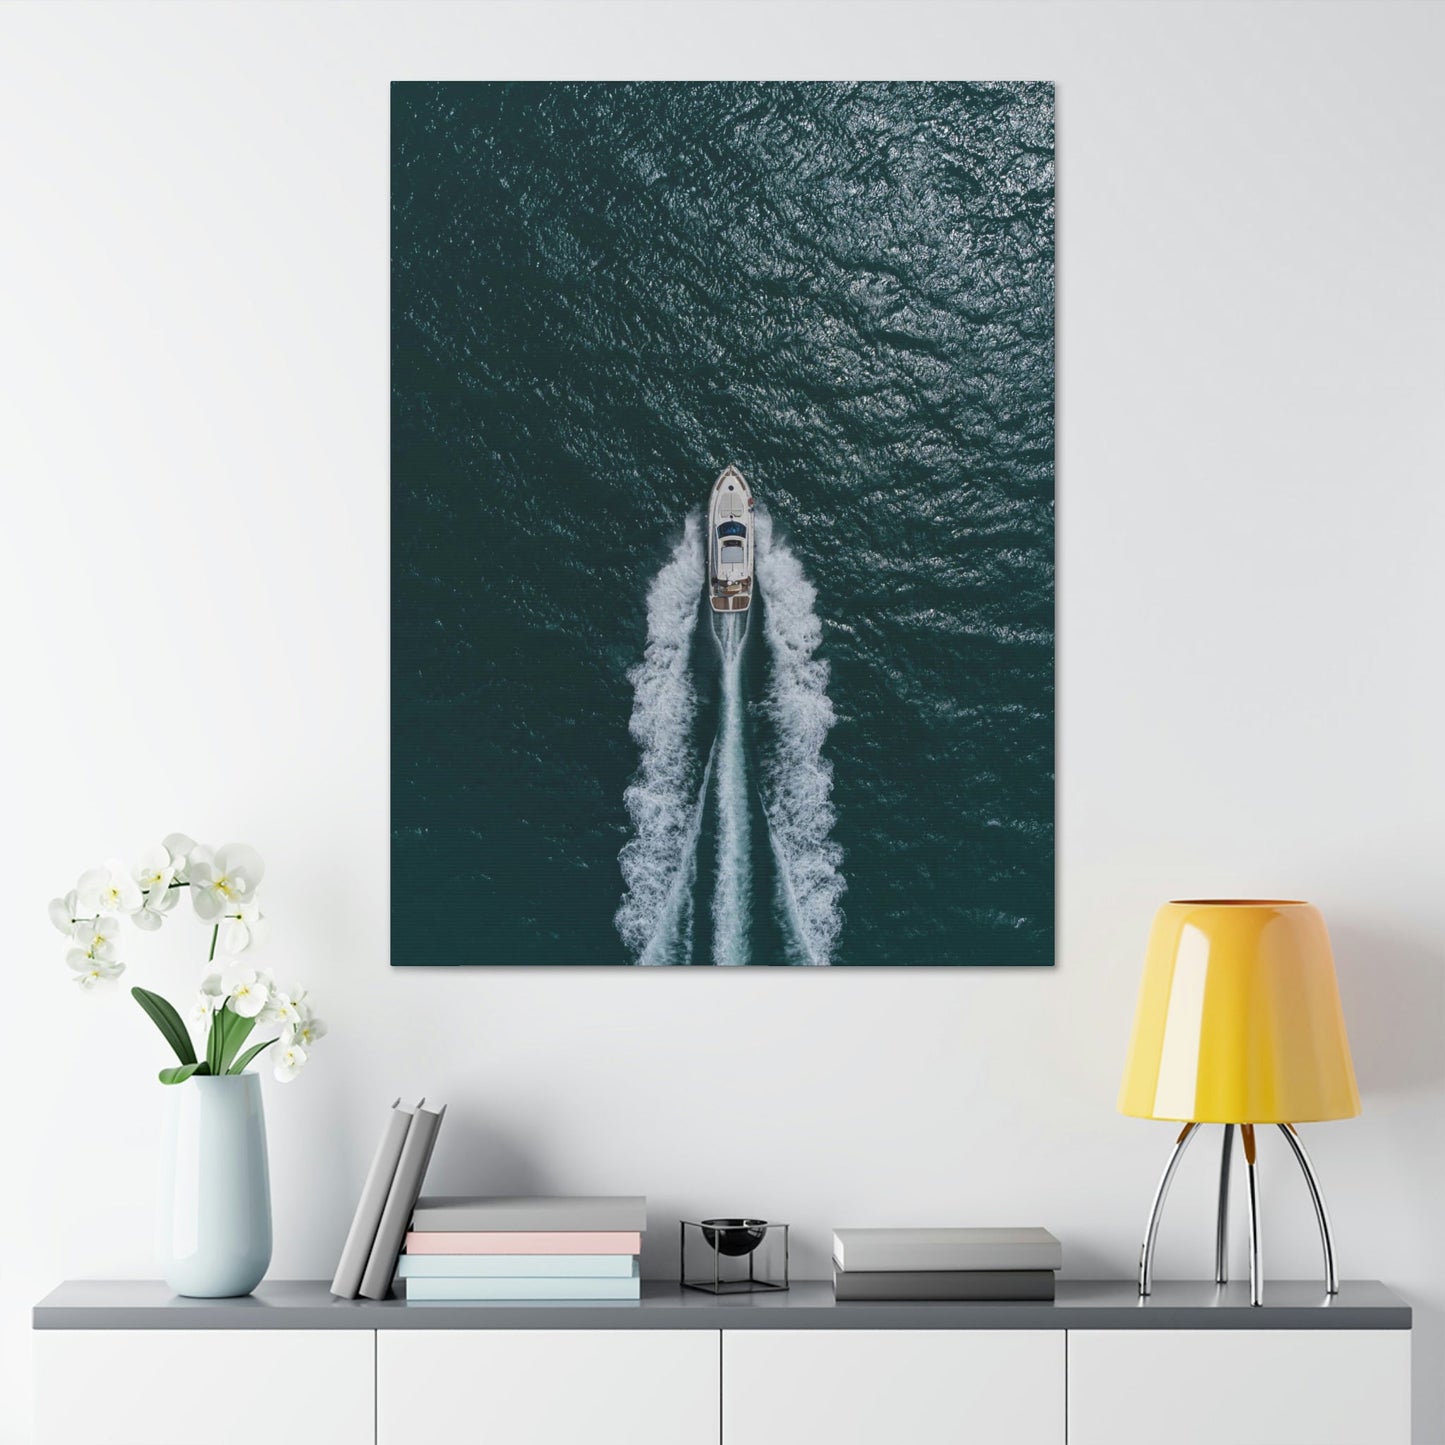 Modern Boat Art: Contemporary Print on Canvas